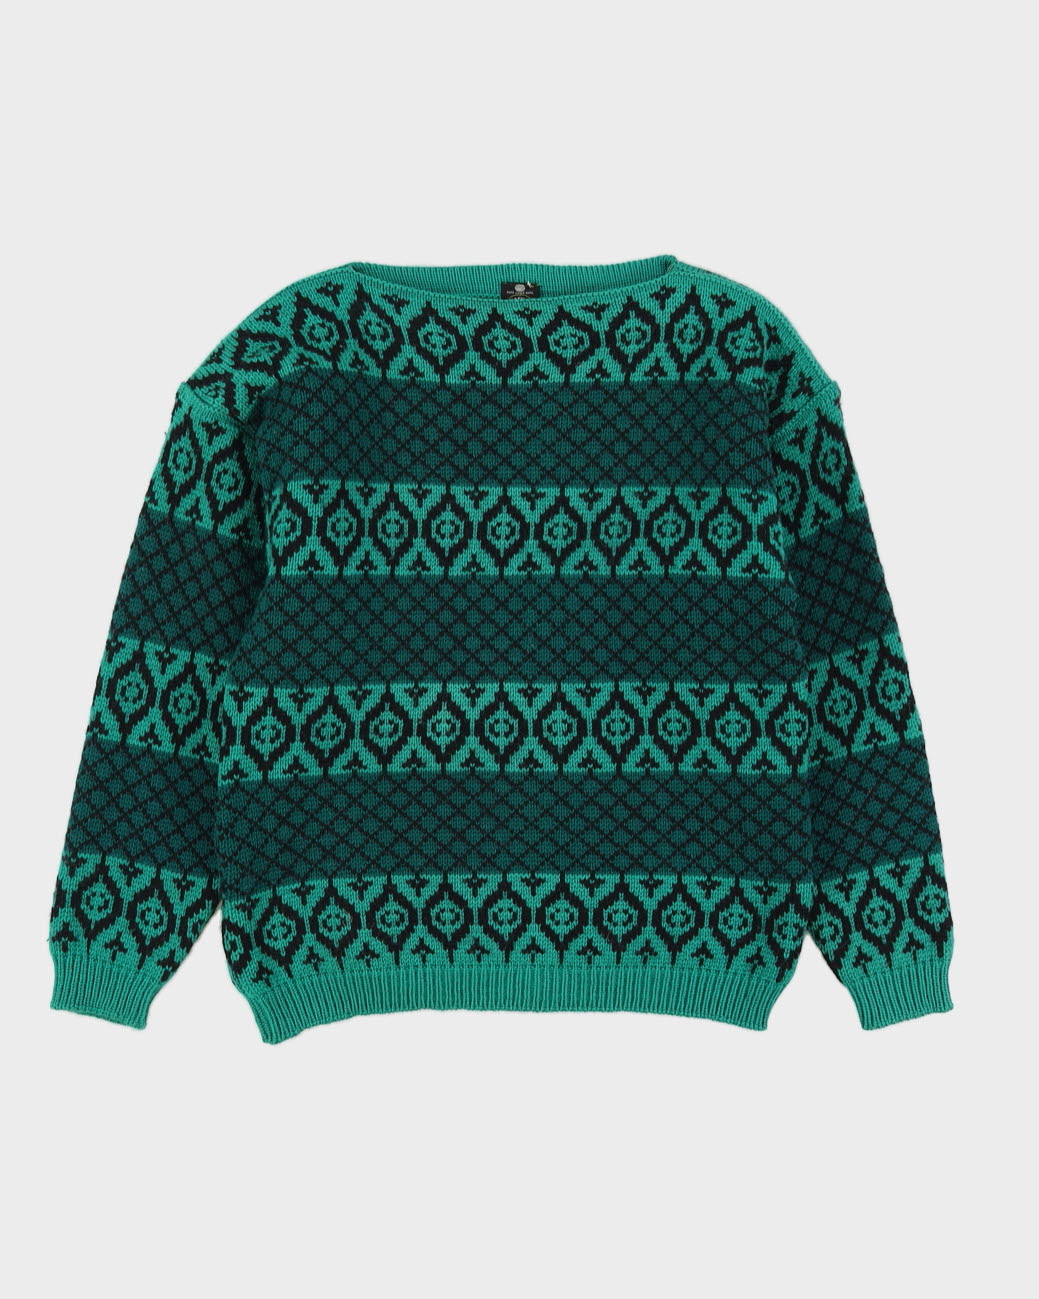 Vintage 1970s Norvyk Green Knitted Jumper - S